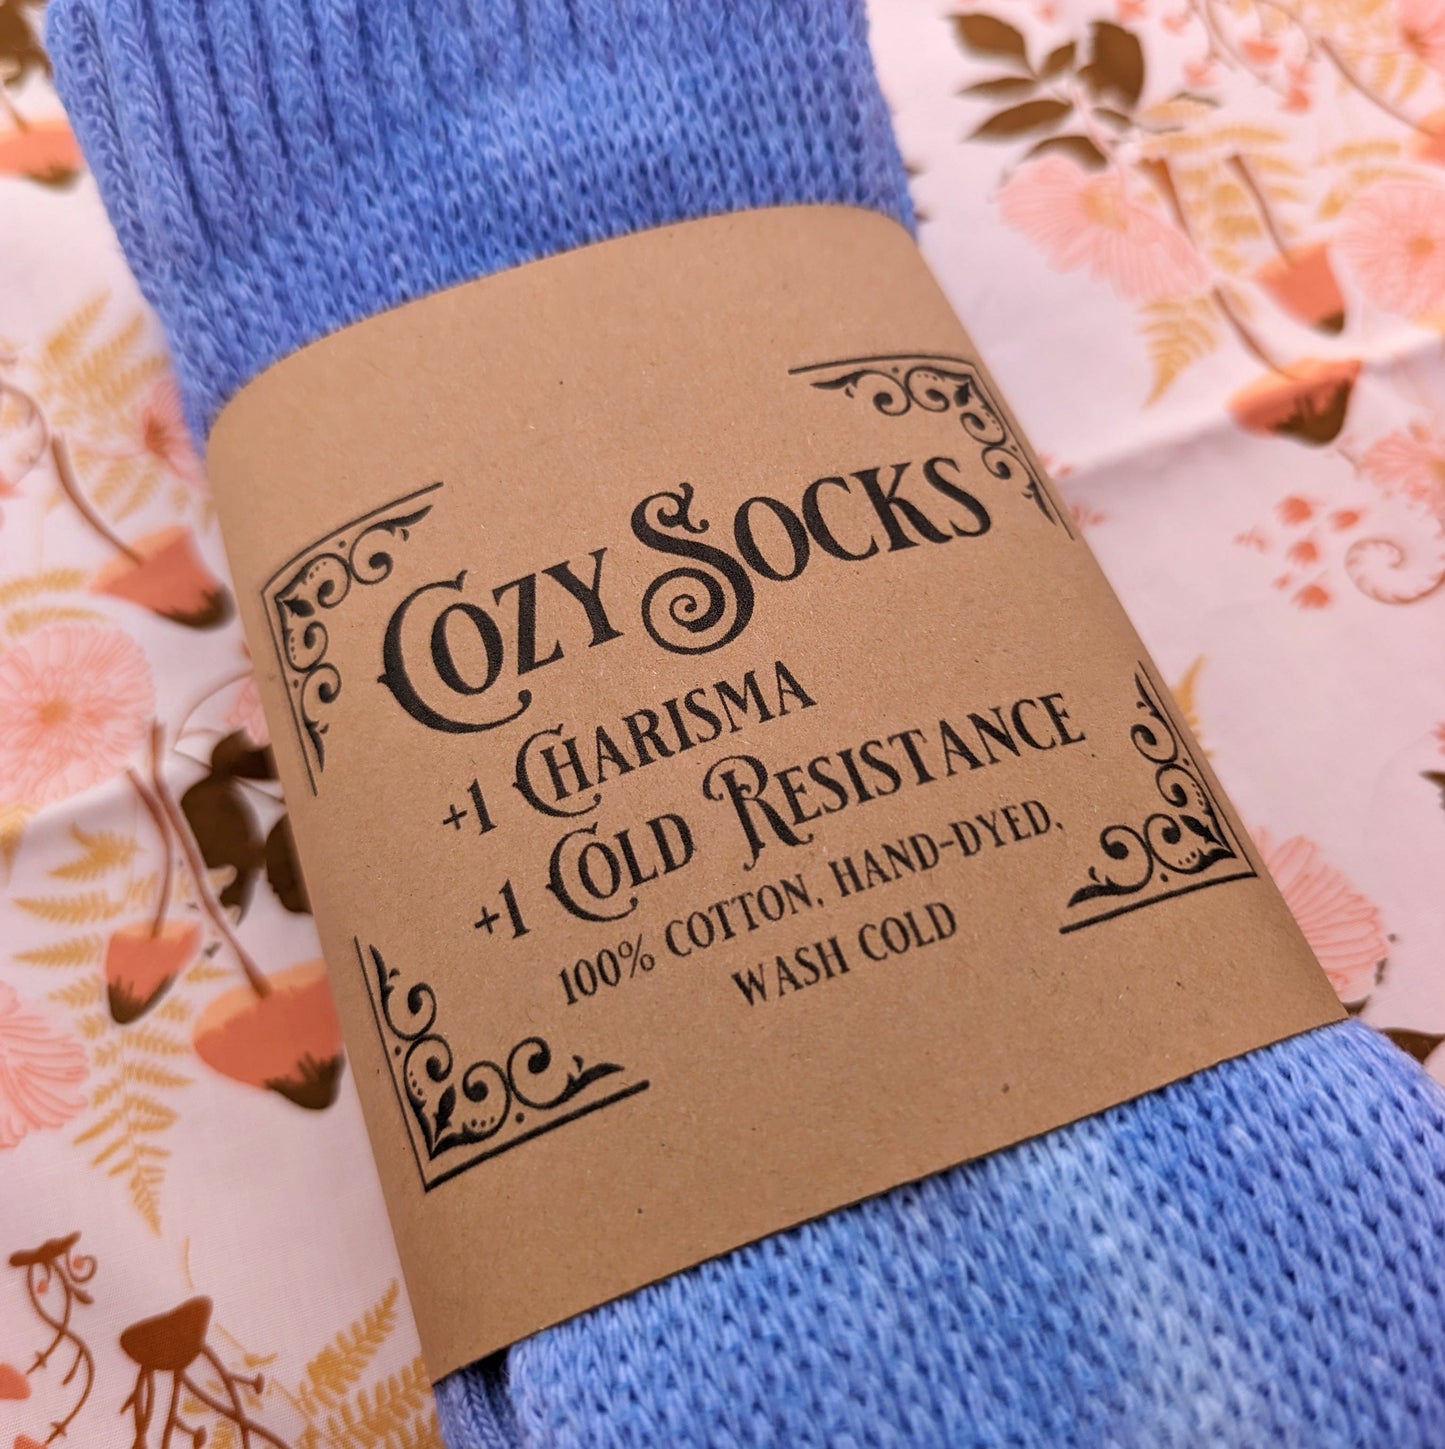 Cozy Socks - Midnight